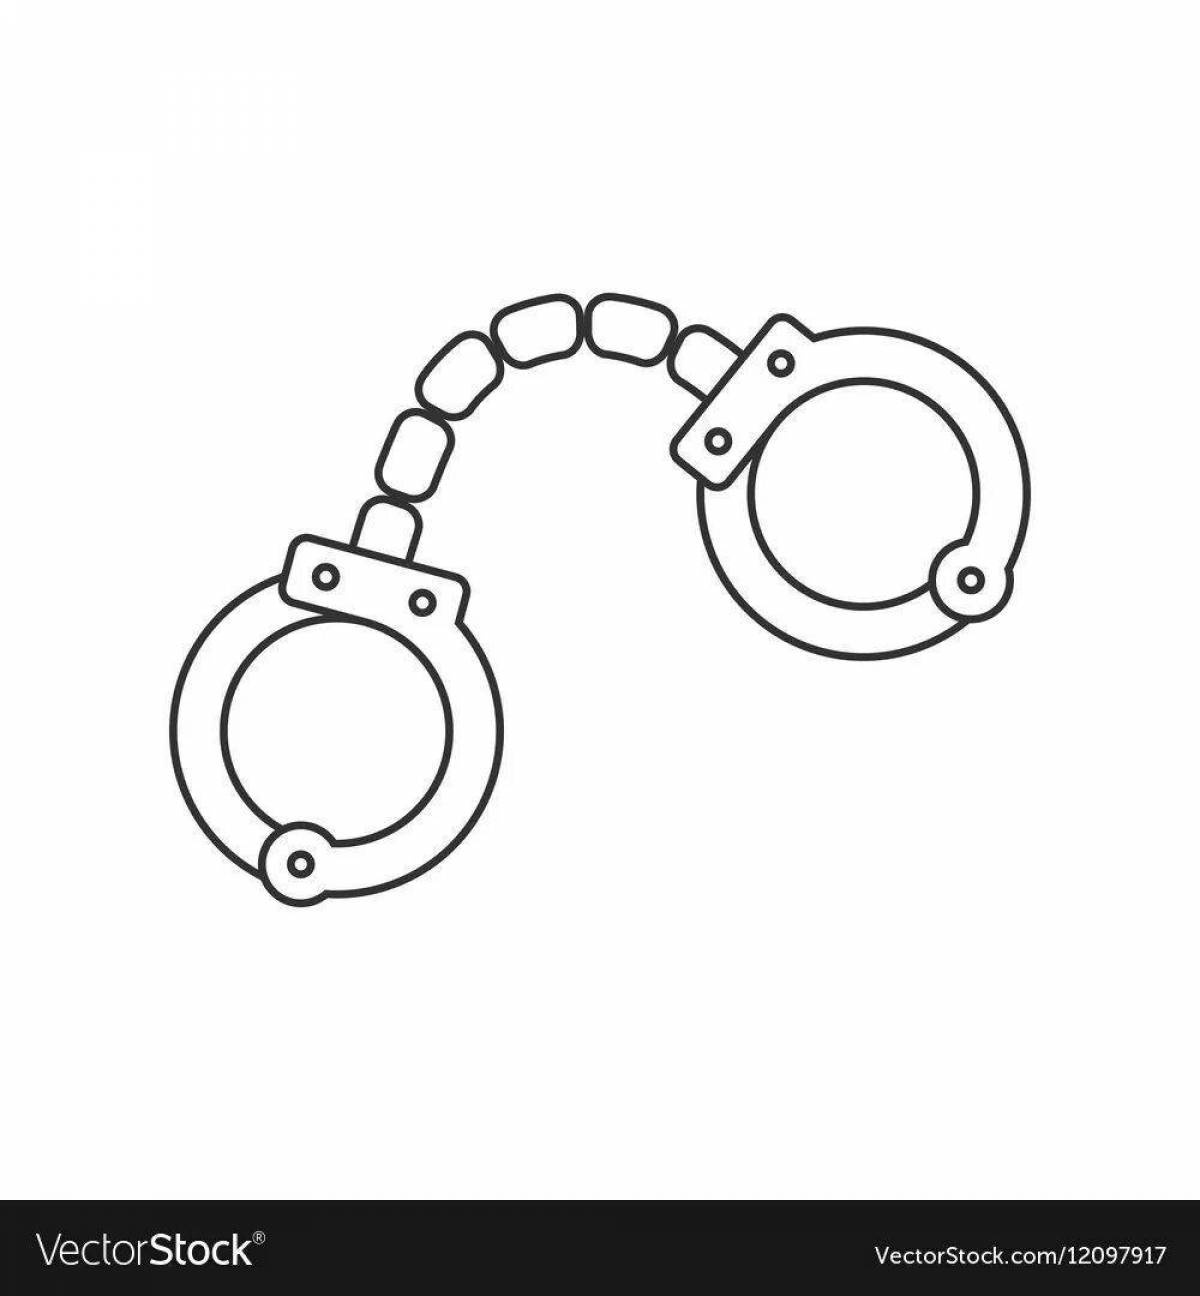 Coloring book inviting handcuffs